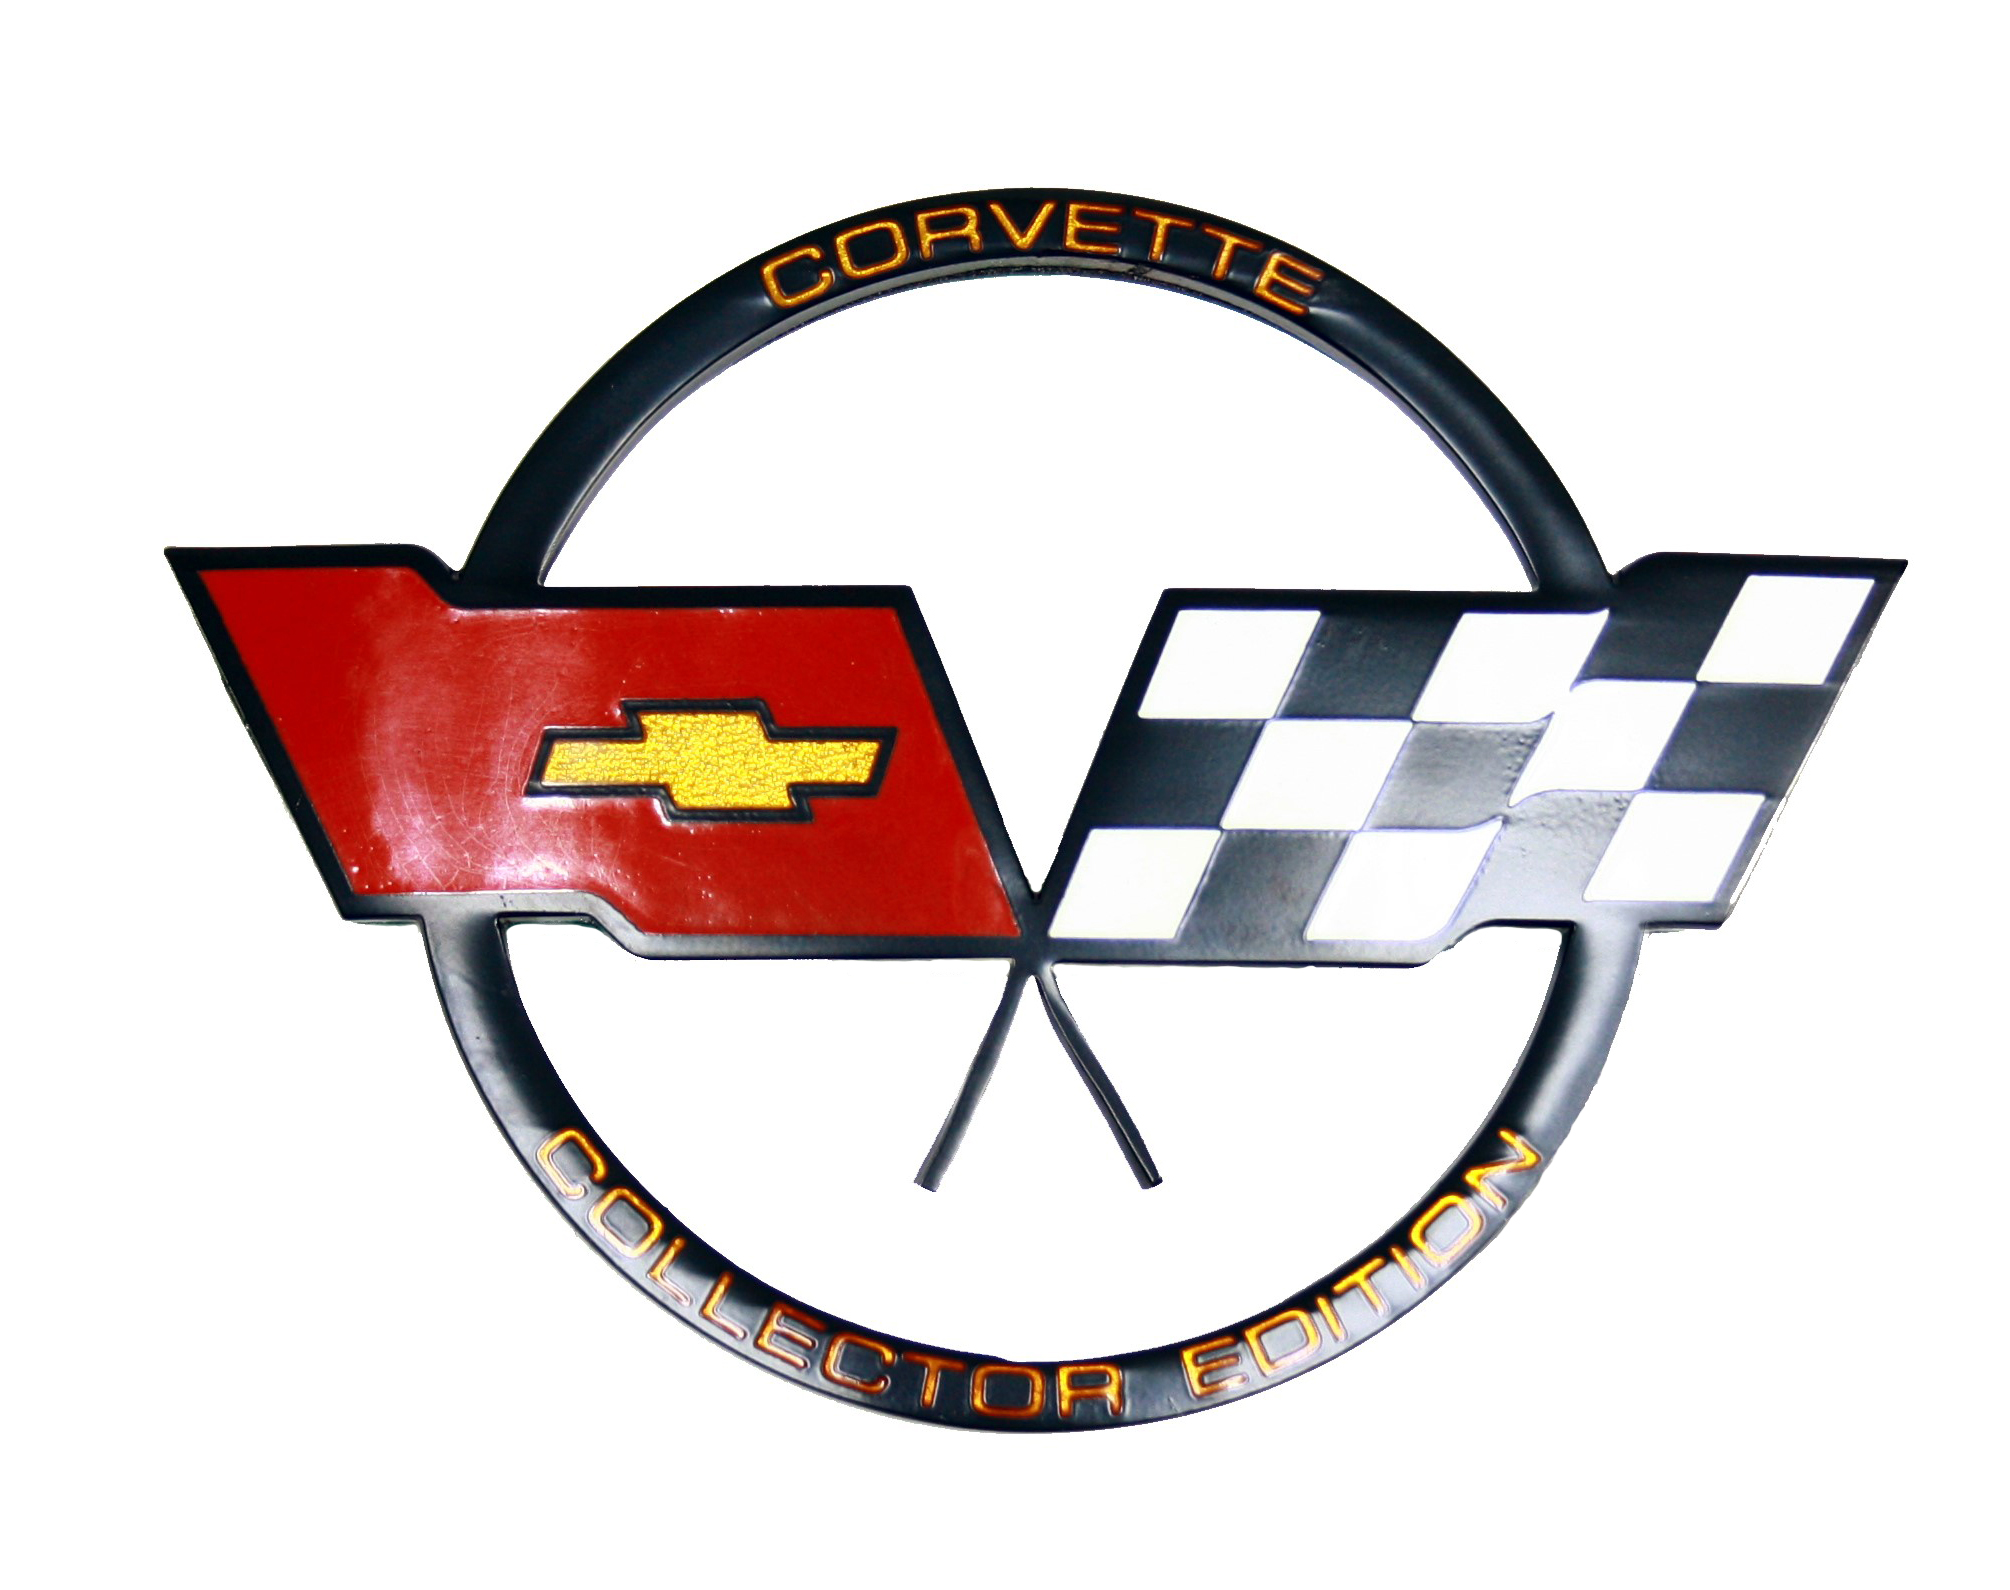 1982 Corvette Gas Door Emblem - Collector's Edition